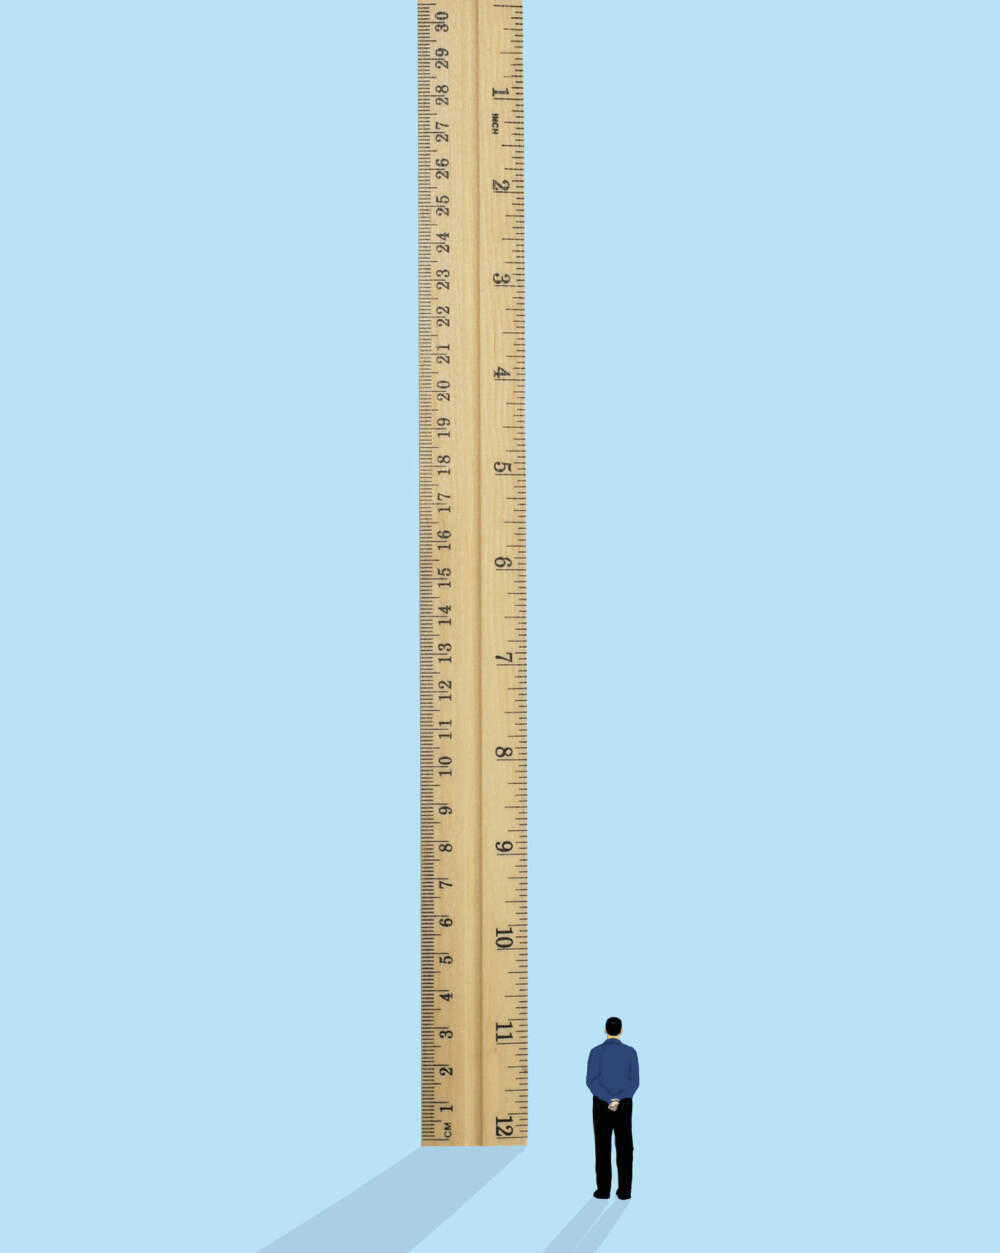 Man standing near oversized ruler against blue background. (Getty)